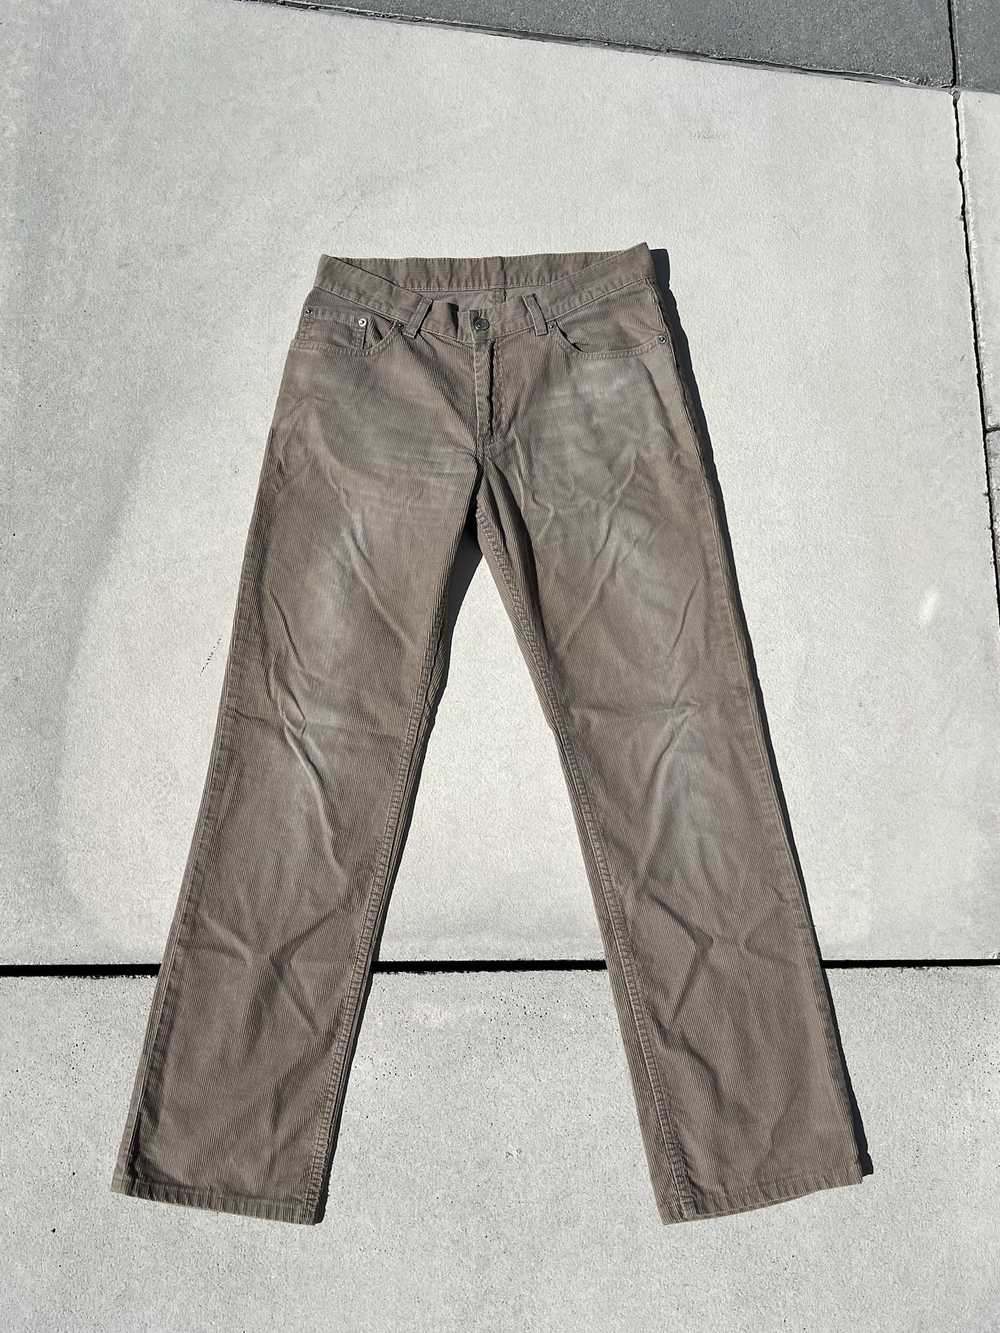 Helmut Lang Helmut Lang Vintage Corduroy Pants - image 1